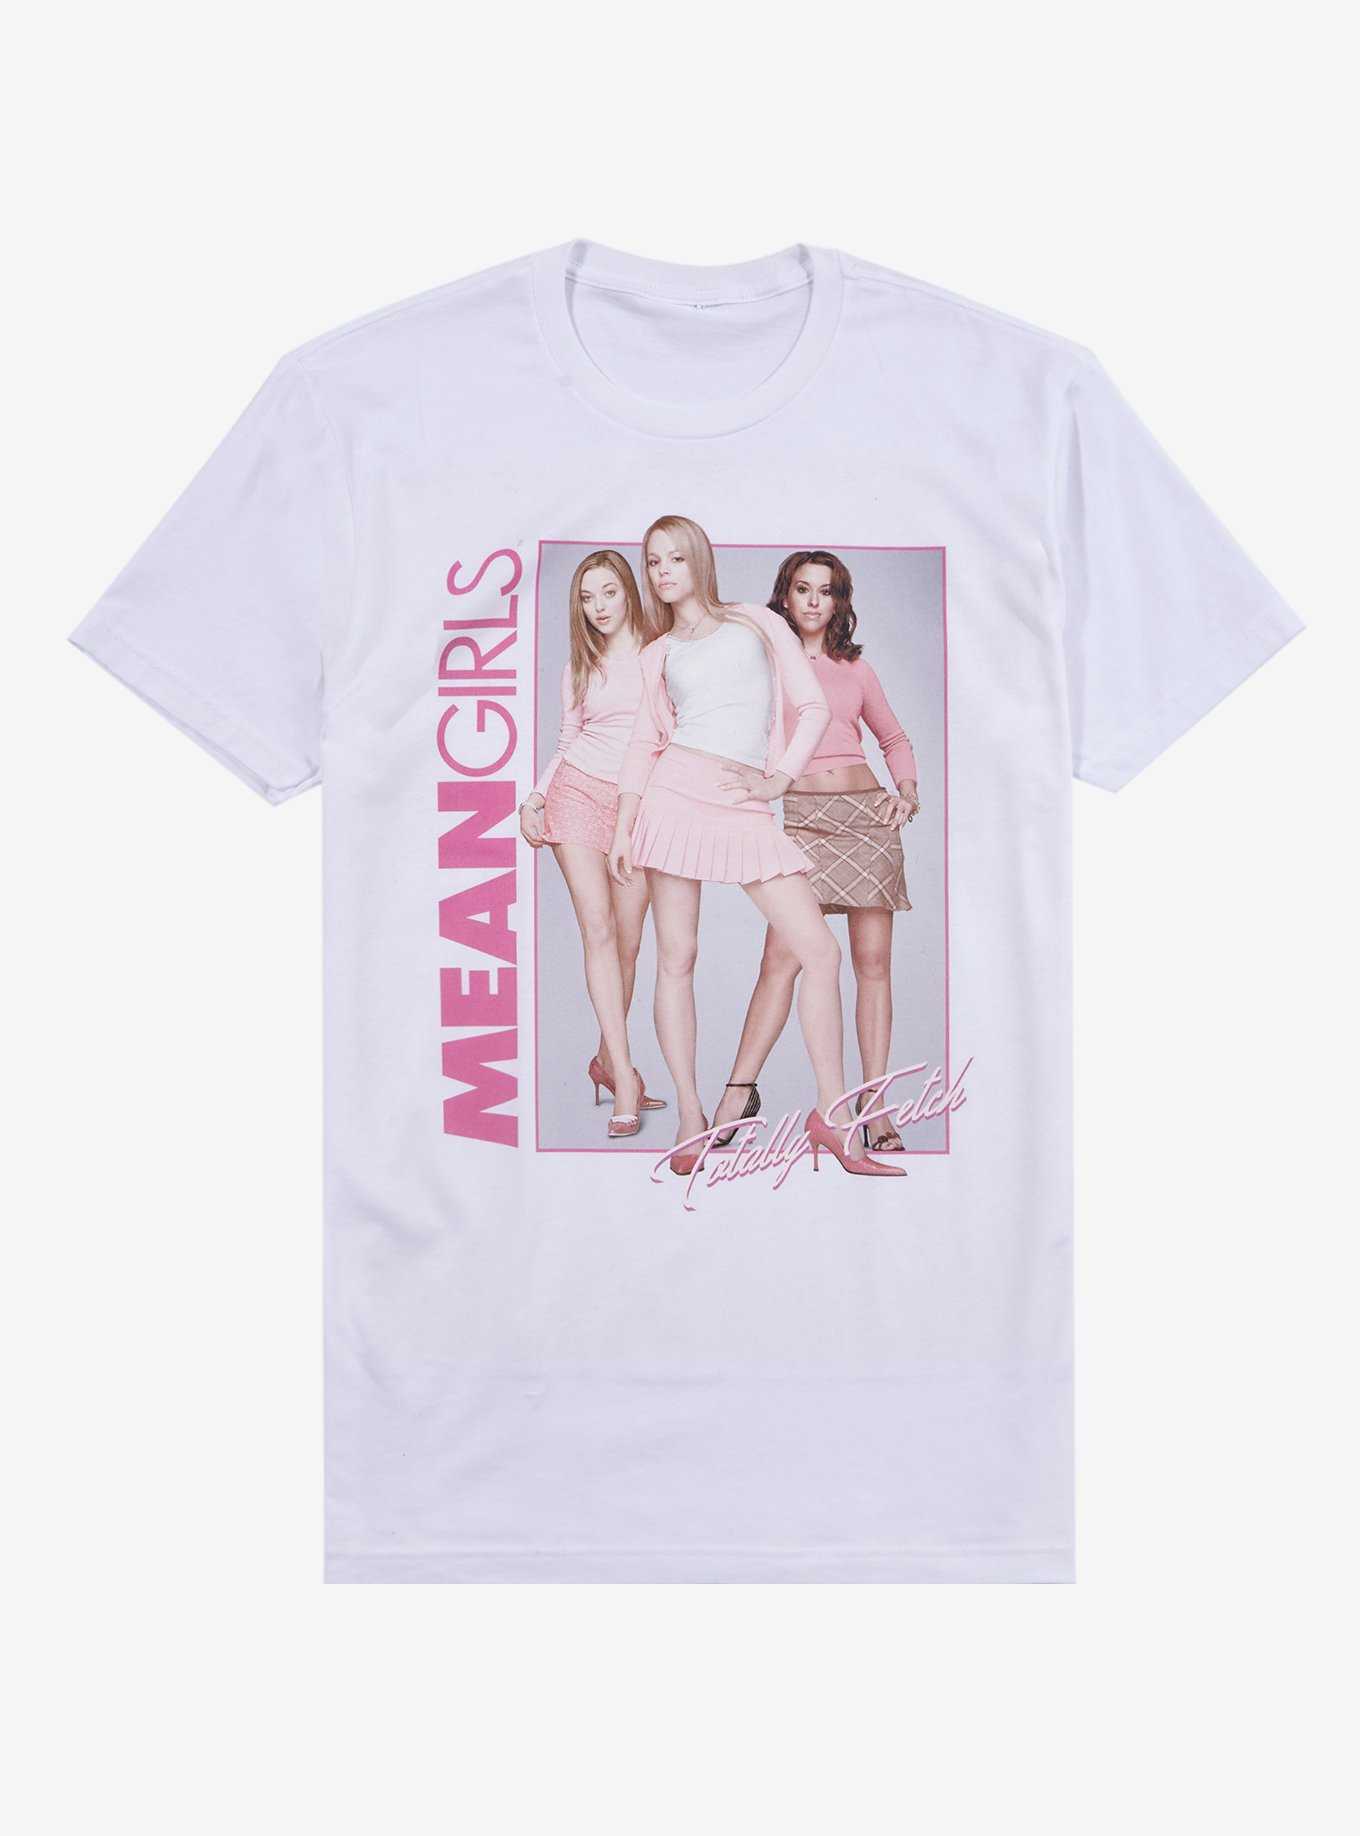 OFFICIAL Mean Girls Shirts & Merchandise